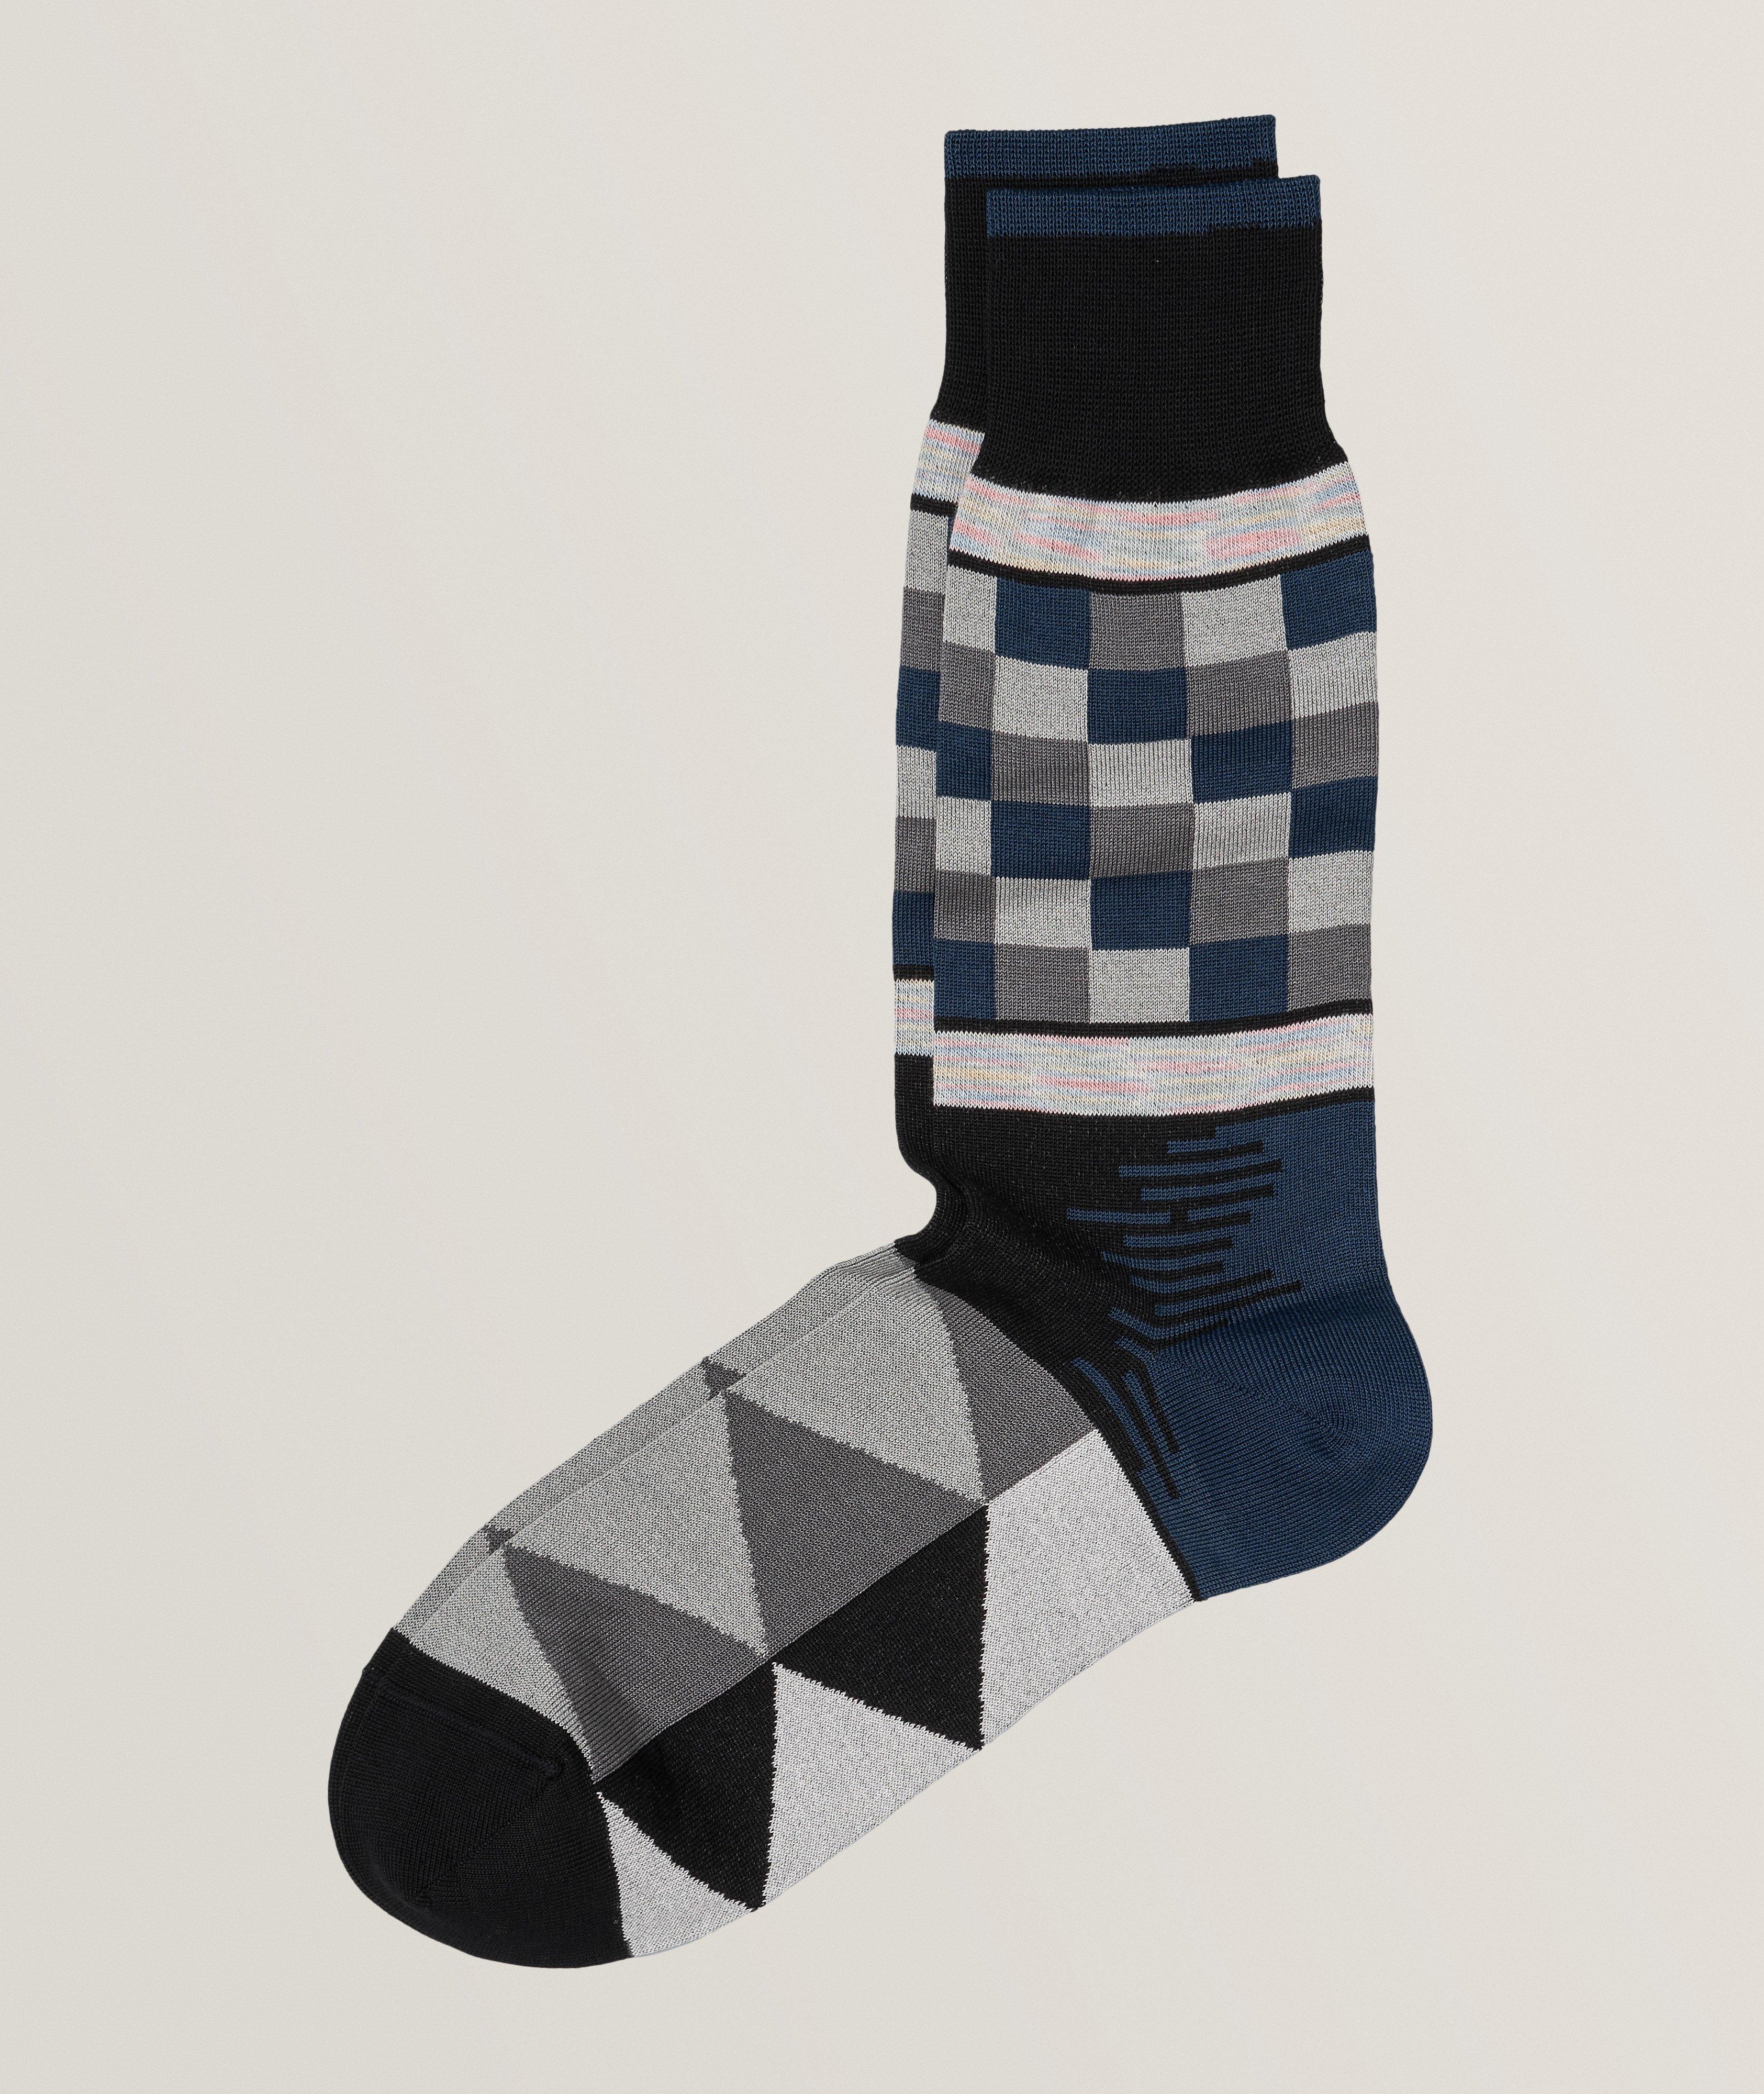 Grid Triangle Merrcerised Cotton-Blend Dress Socks image 0